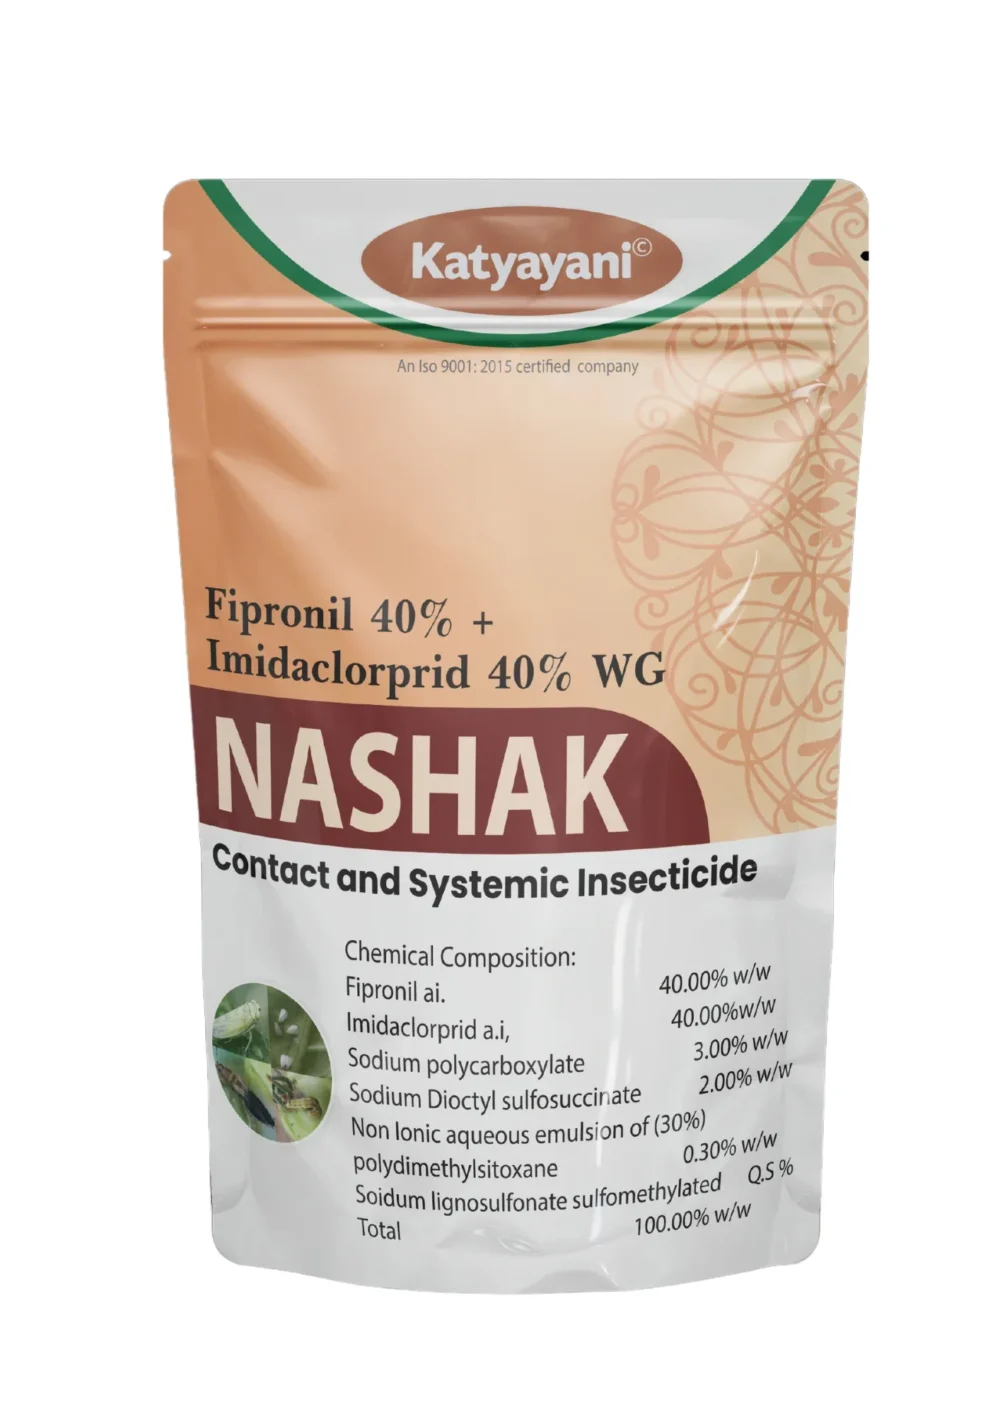 Fipronil 40 % + Imidacloprid 40 % wg - Nashak